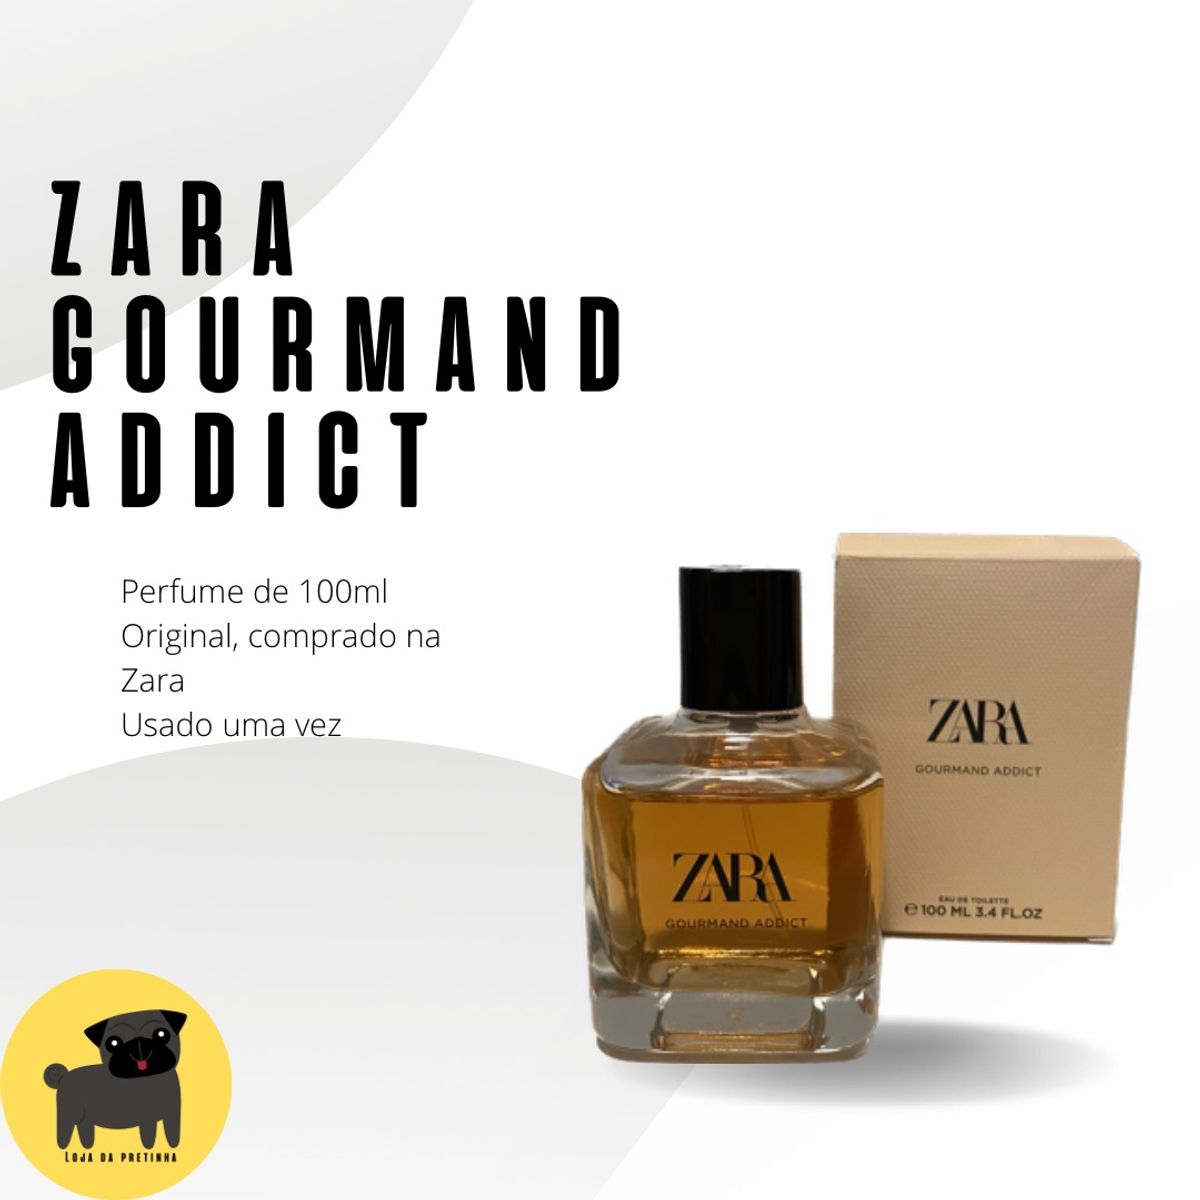 Addicted to ZARA : r/Perfumes